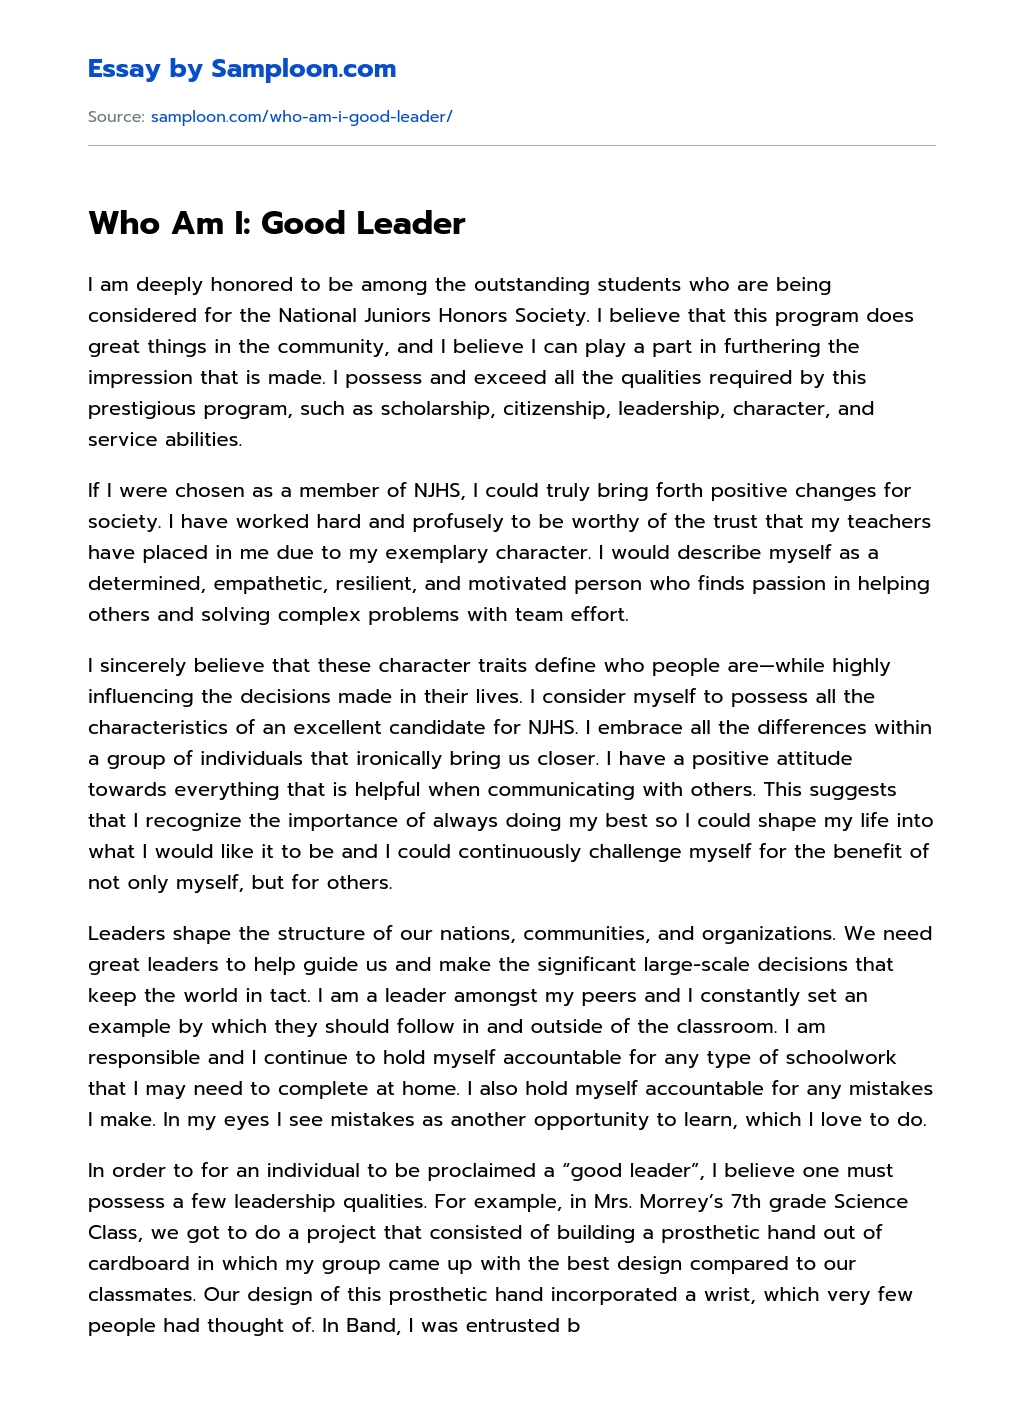 Who Am I: Good Leader essay